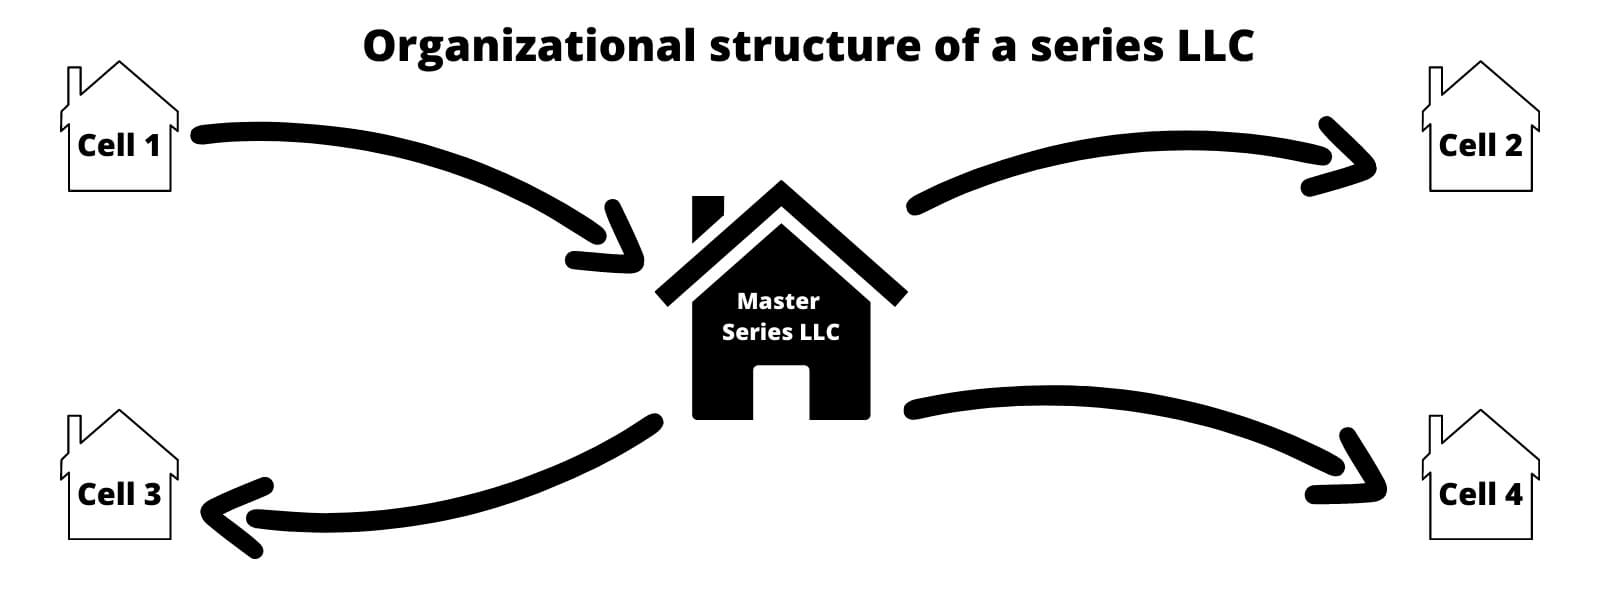 Organizational structure of a series LLC